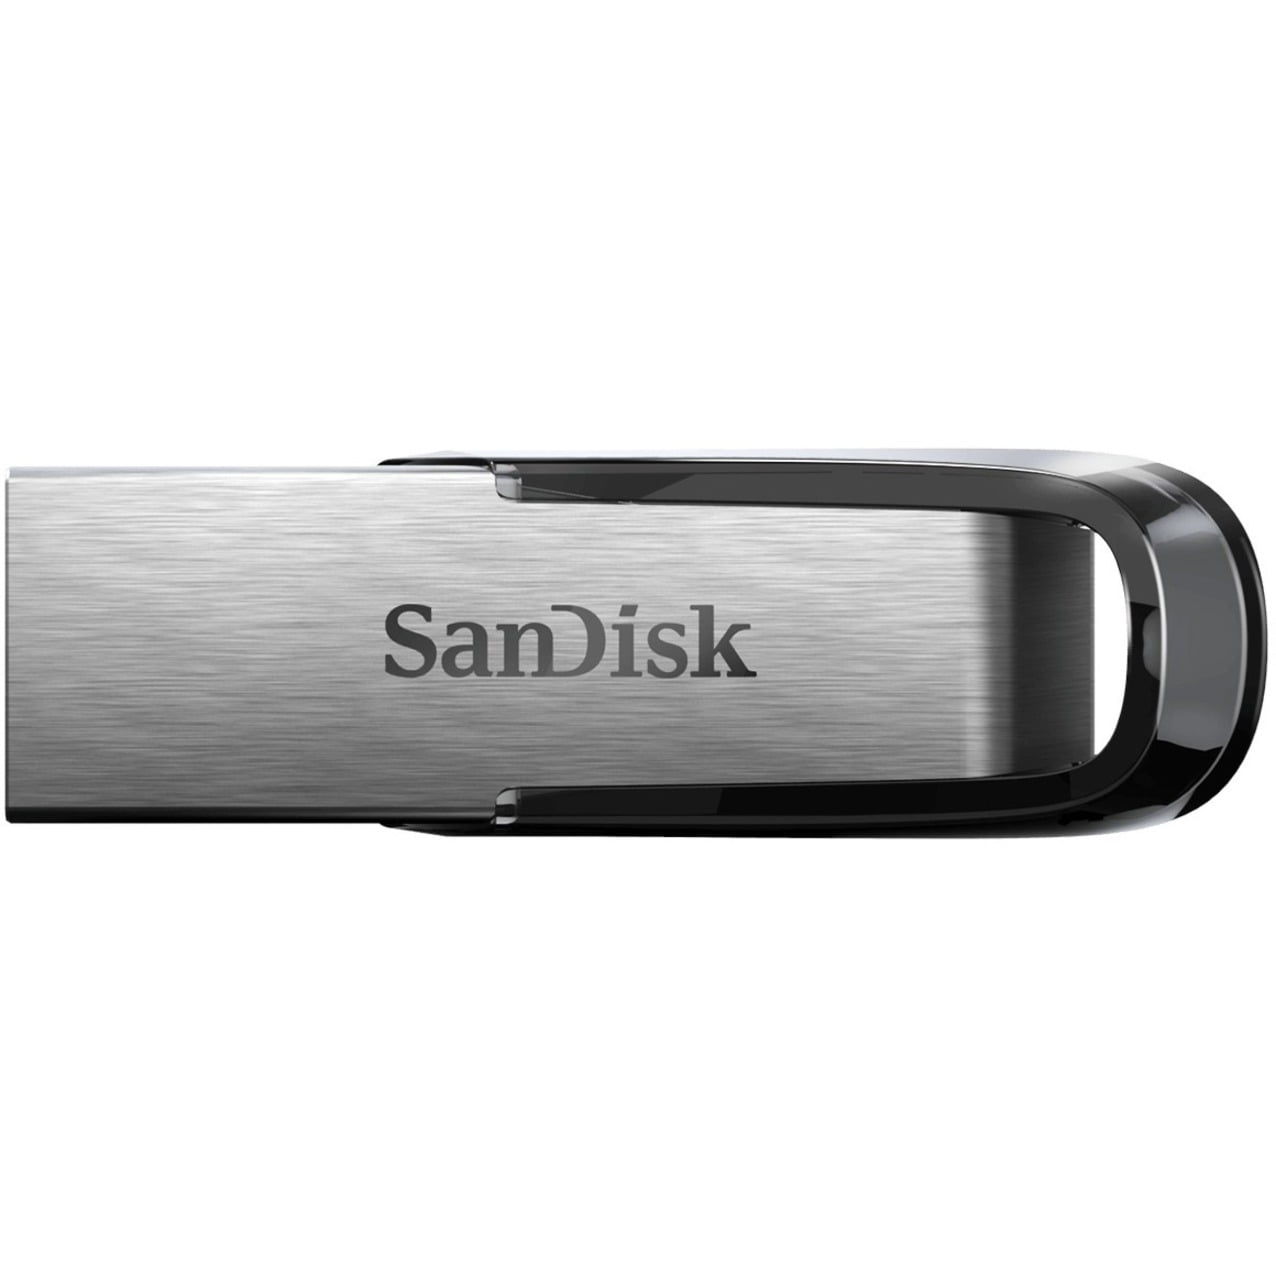 SanDisk 256GB Ultra Flair™ USB 3.0 Flash Drive - SDCZ73-256G-A46 Walmart.com